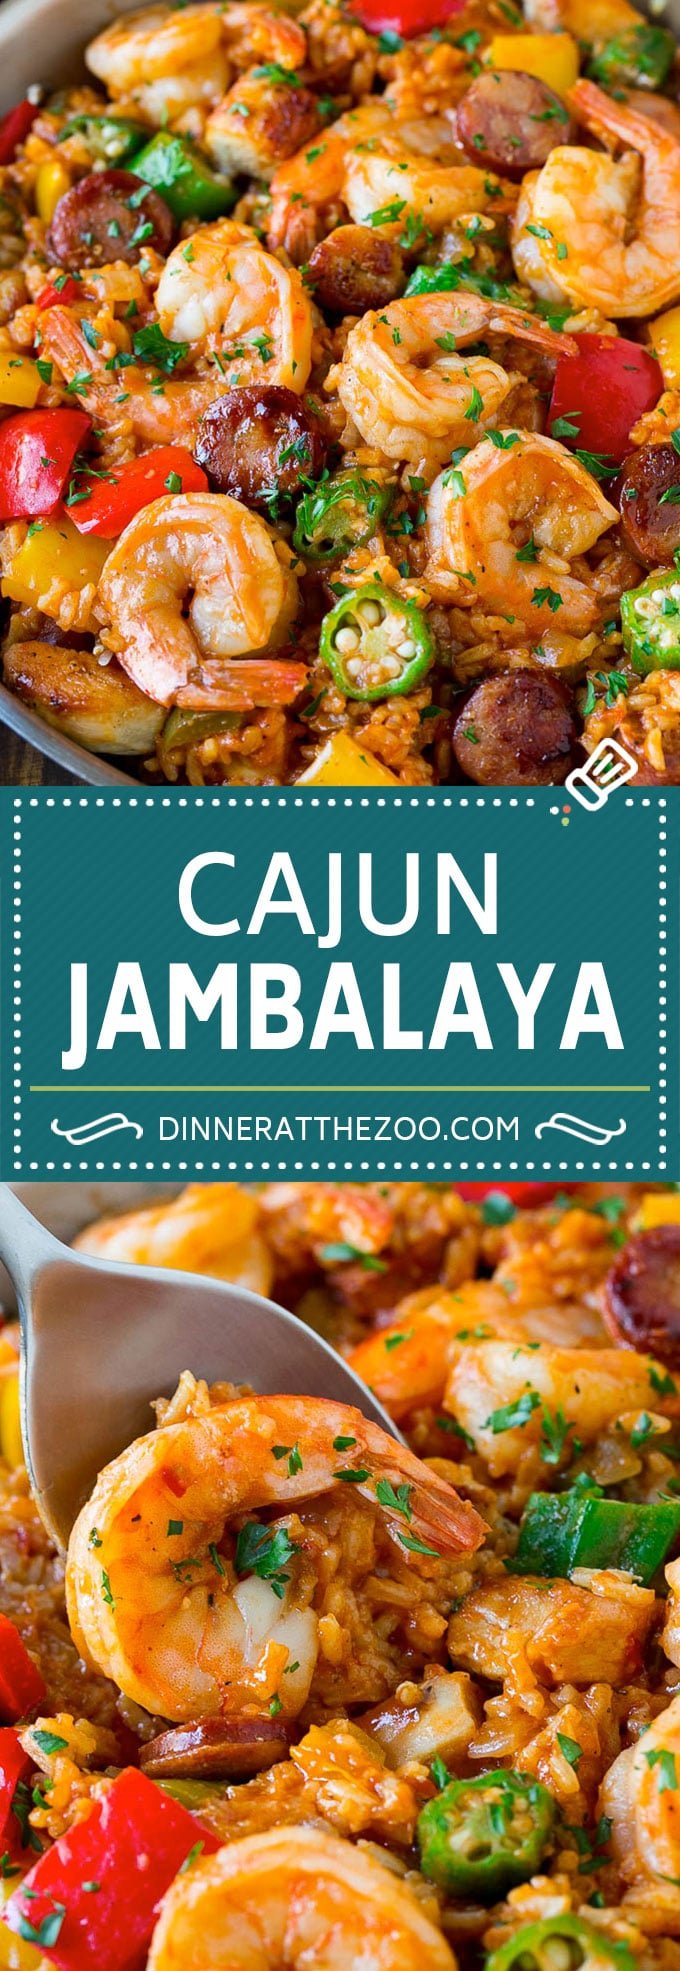 Jambalaya Recipe | One Pot Meal | Chicken Dinner #chicken #shrimp #cajun #rice #onepot #dinner #dinneratthezoo #glutenfree